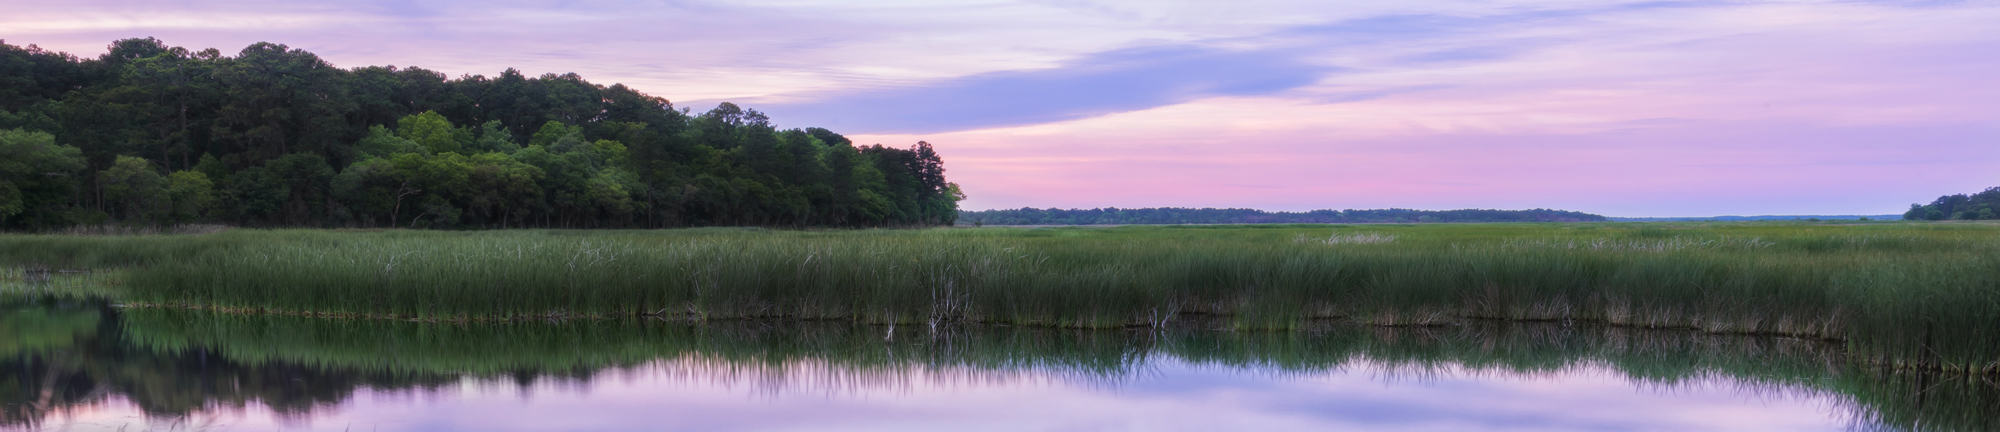 A salt marsh reflecting the sky at sunset.